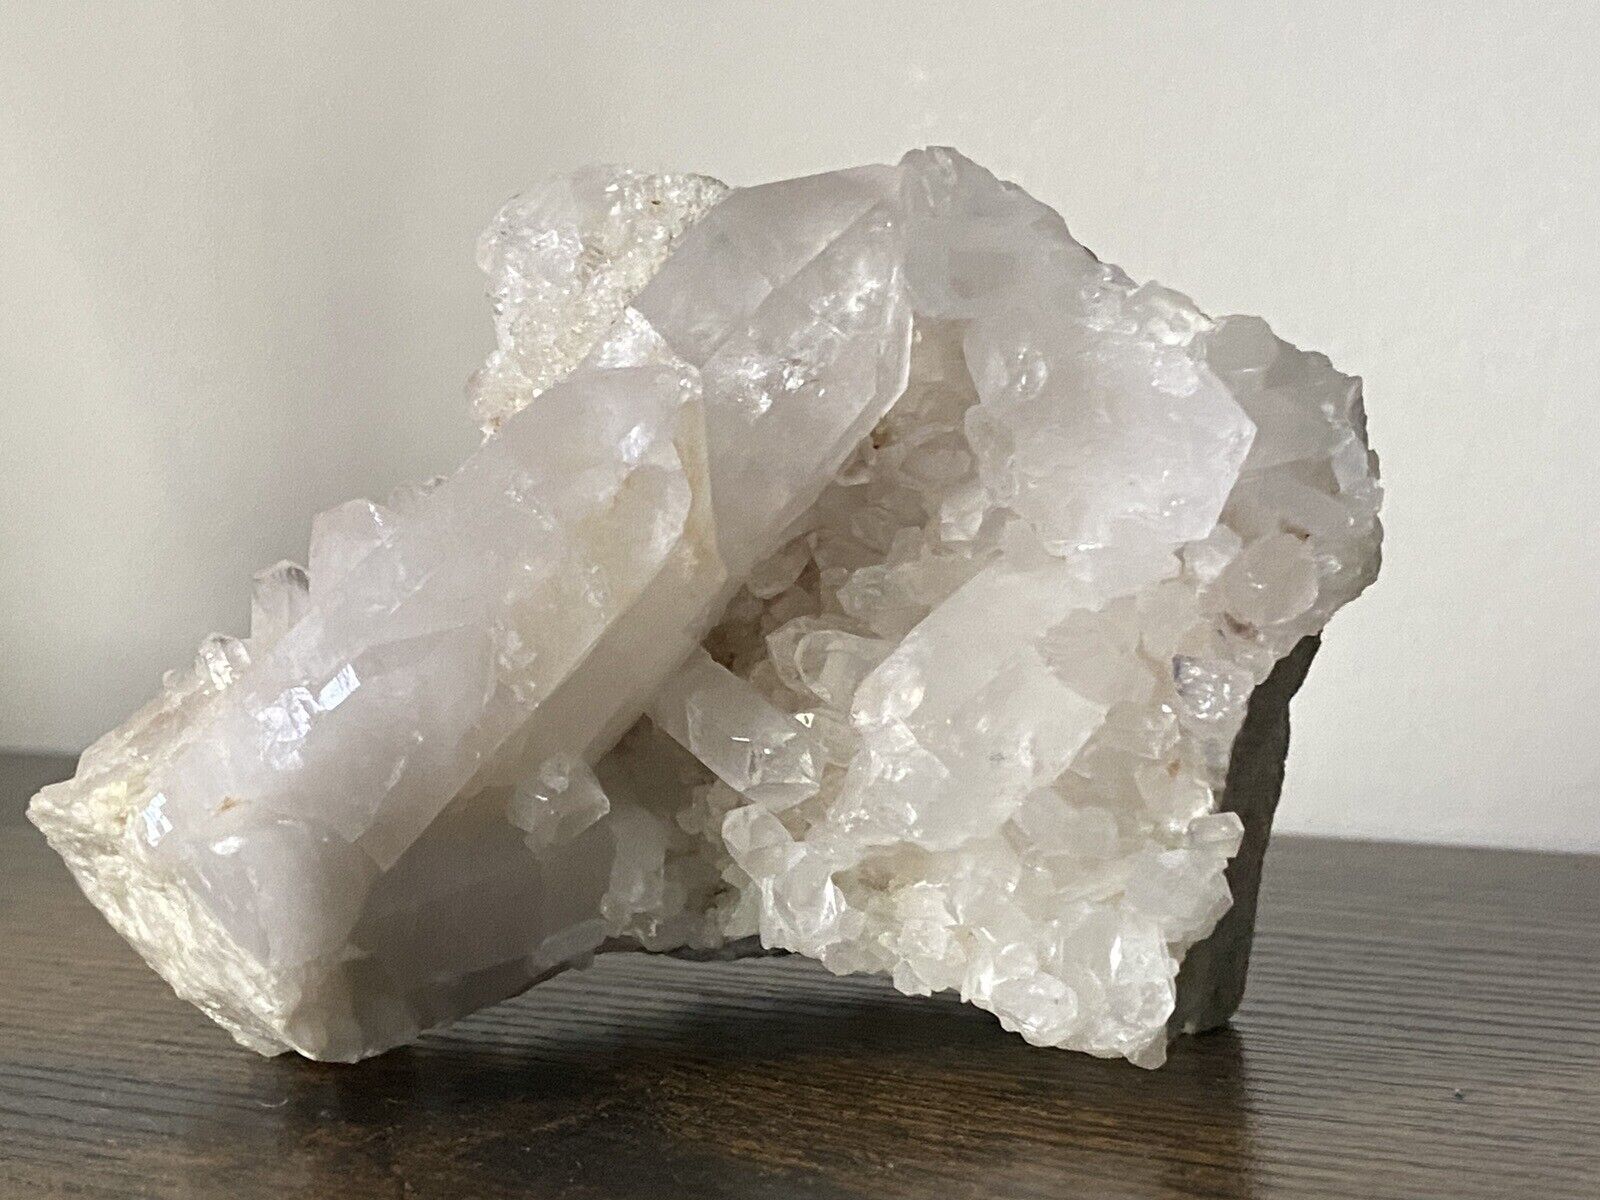 Two Medium Sized Quartz Crystal Formations